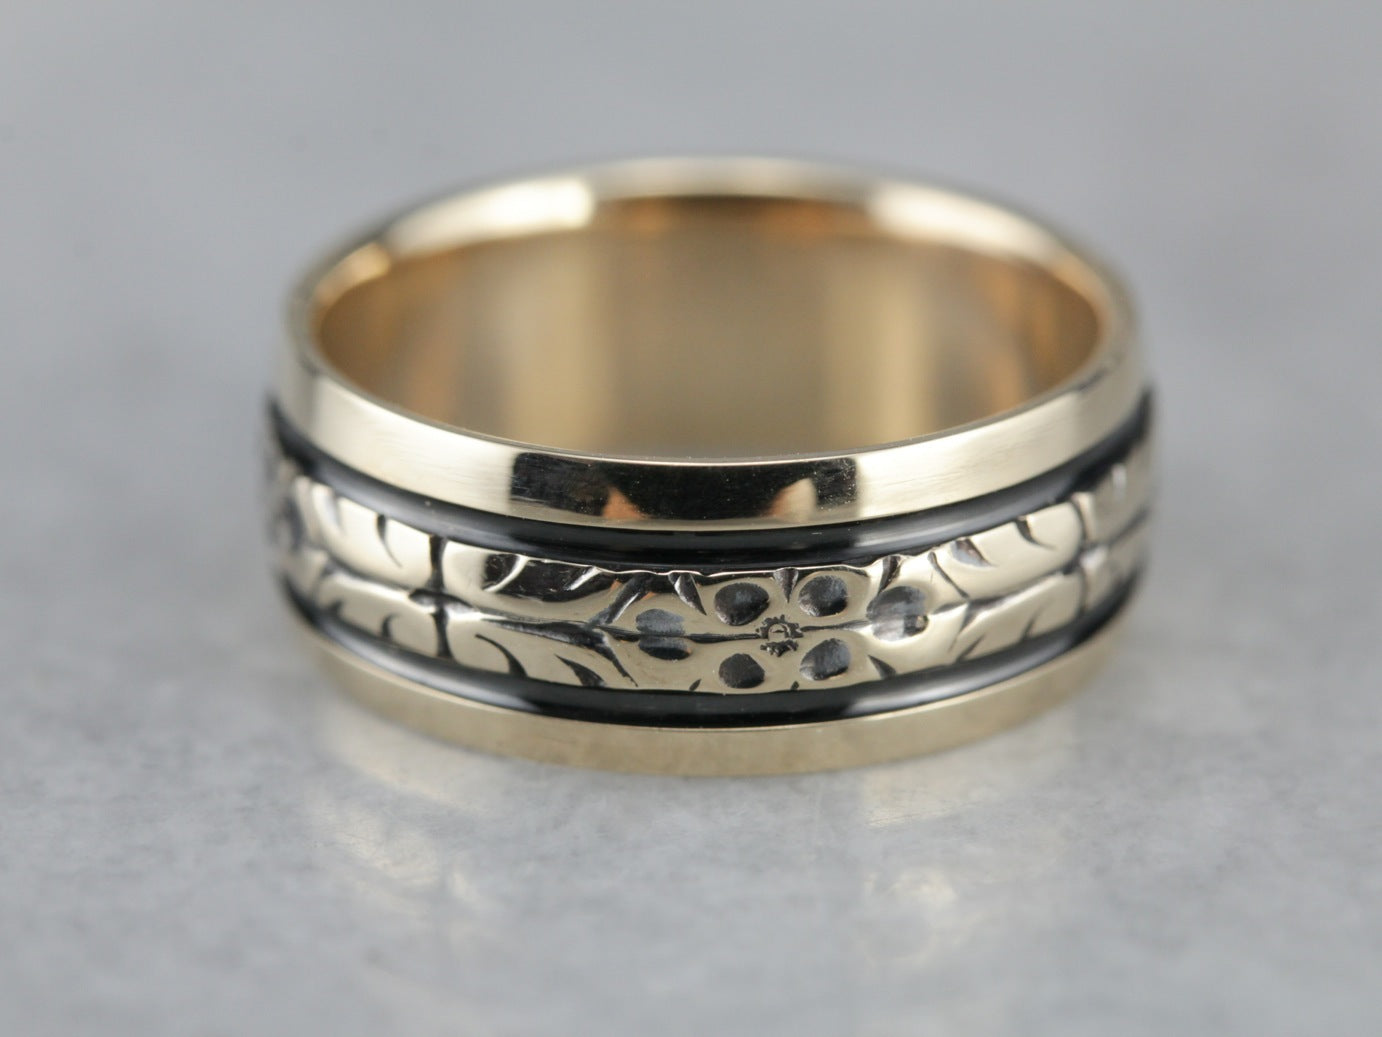 7mm) Unisex or Women's Rose Gold Tone Stainless Steel Ring Band Engraved  Flower Vine / Floral Design Wedding ring band Ring - Ring Blingers |